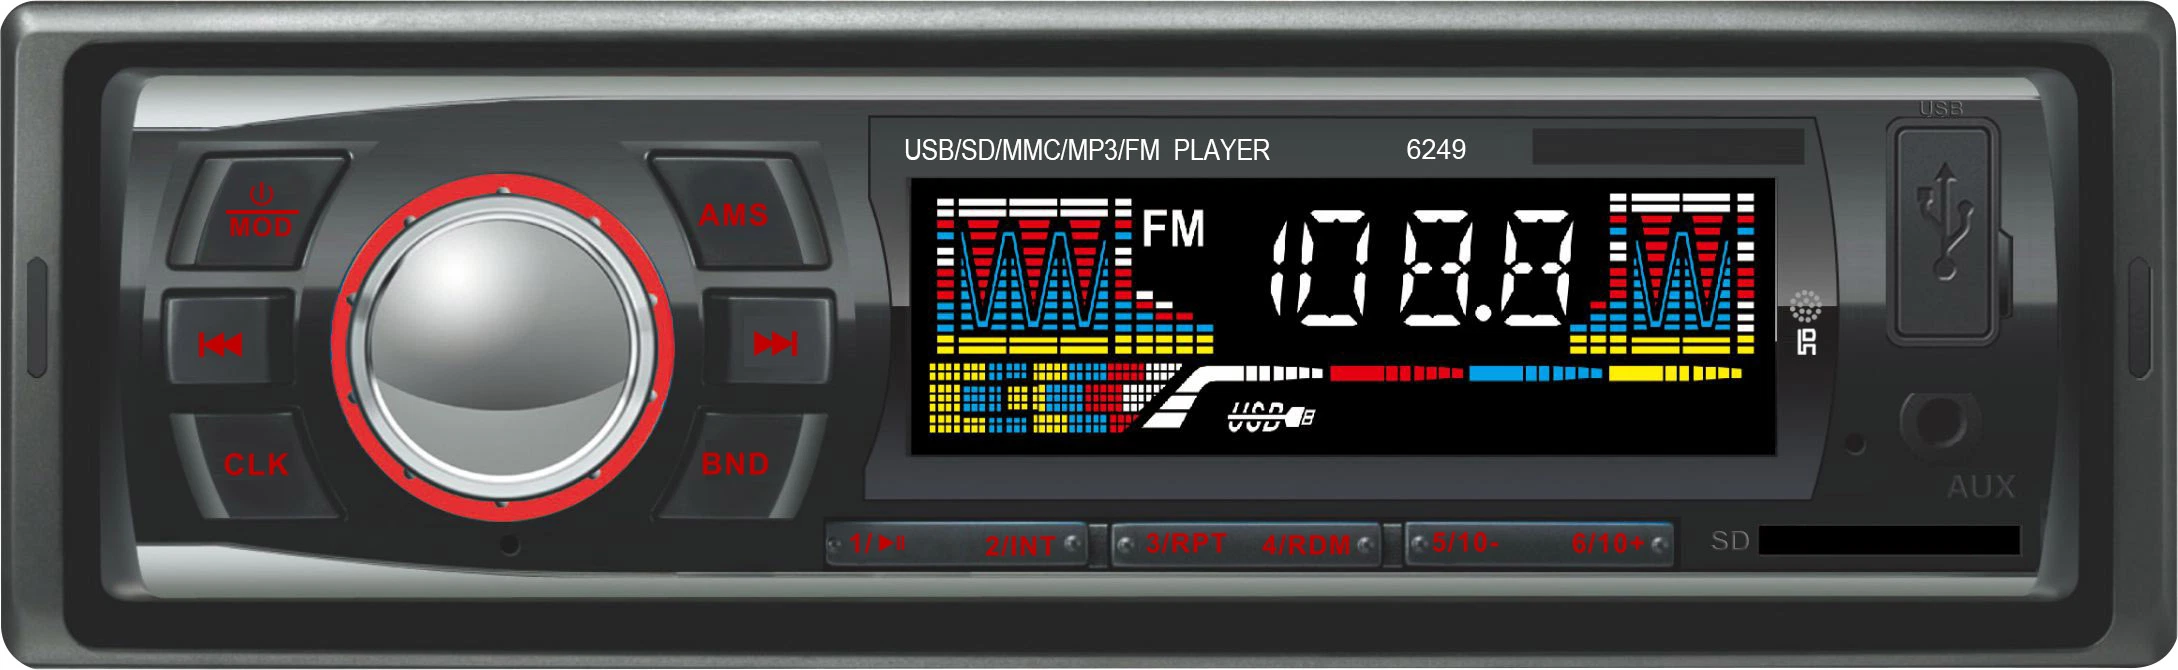 Double USB Car Consumer Electronics MP3 Audio Head Unit